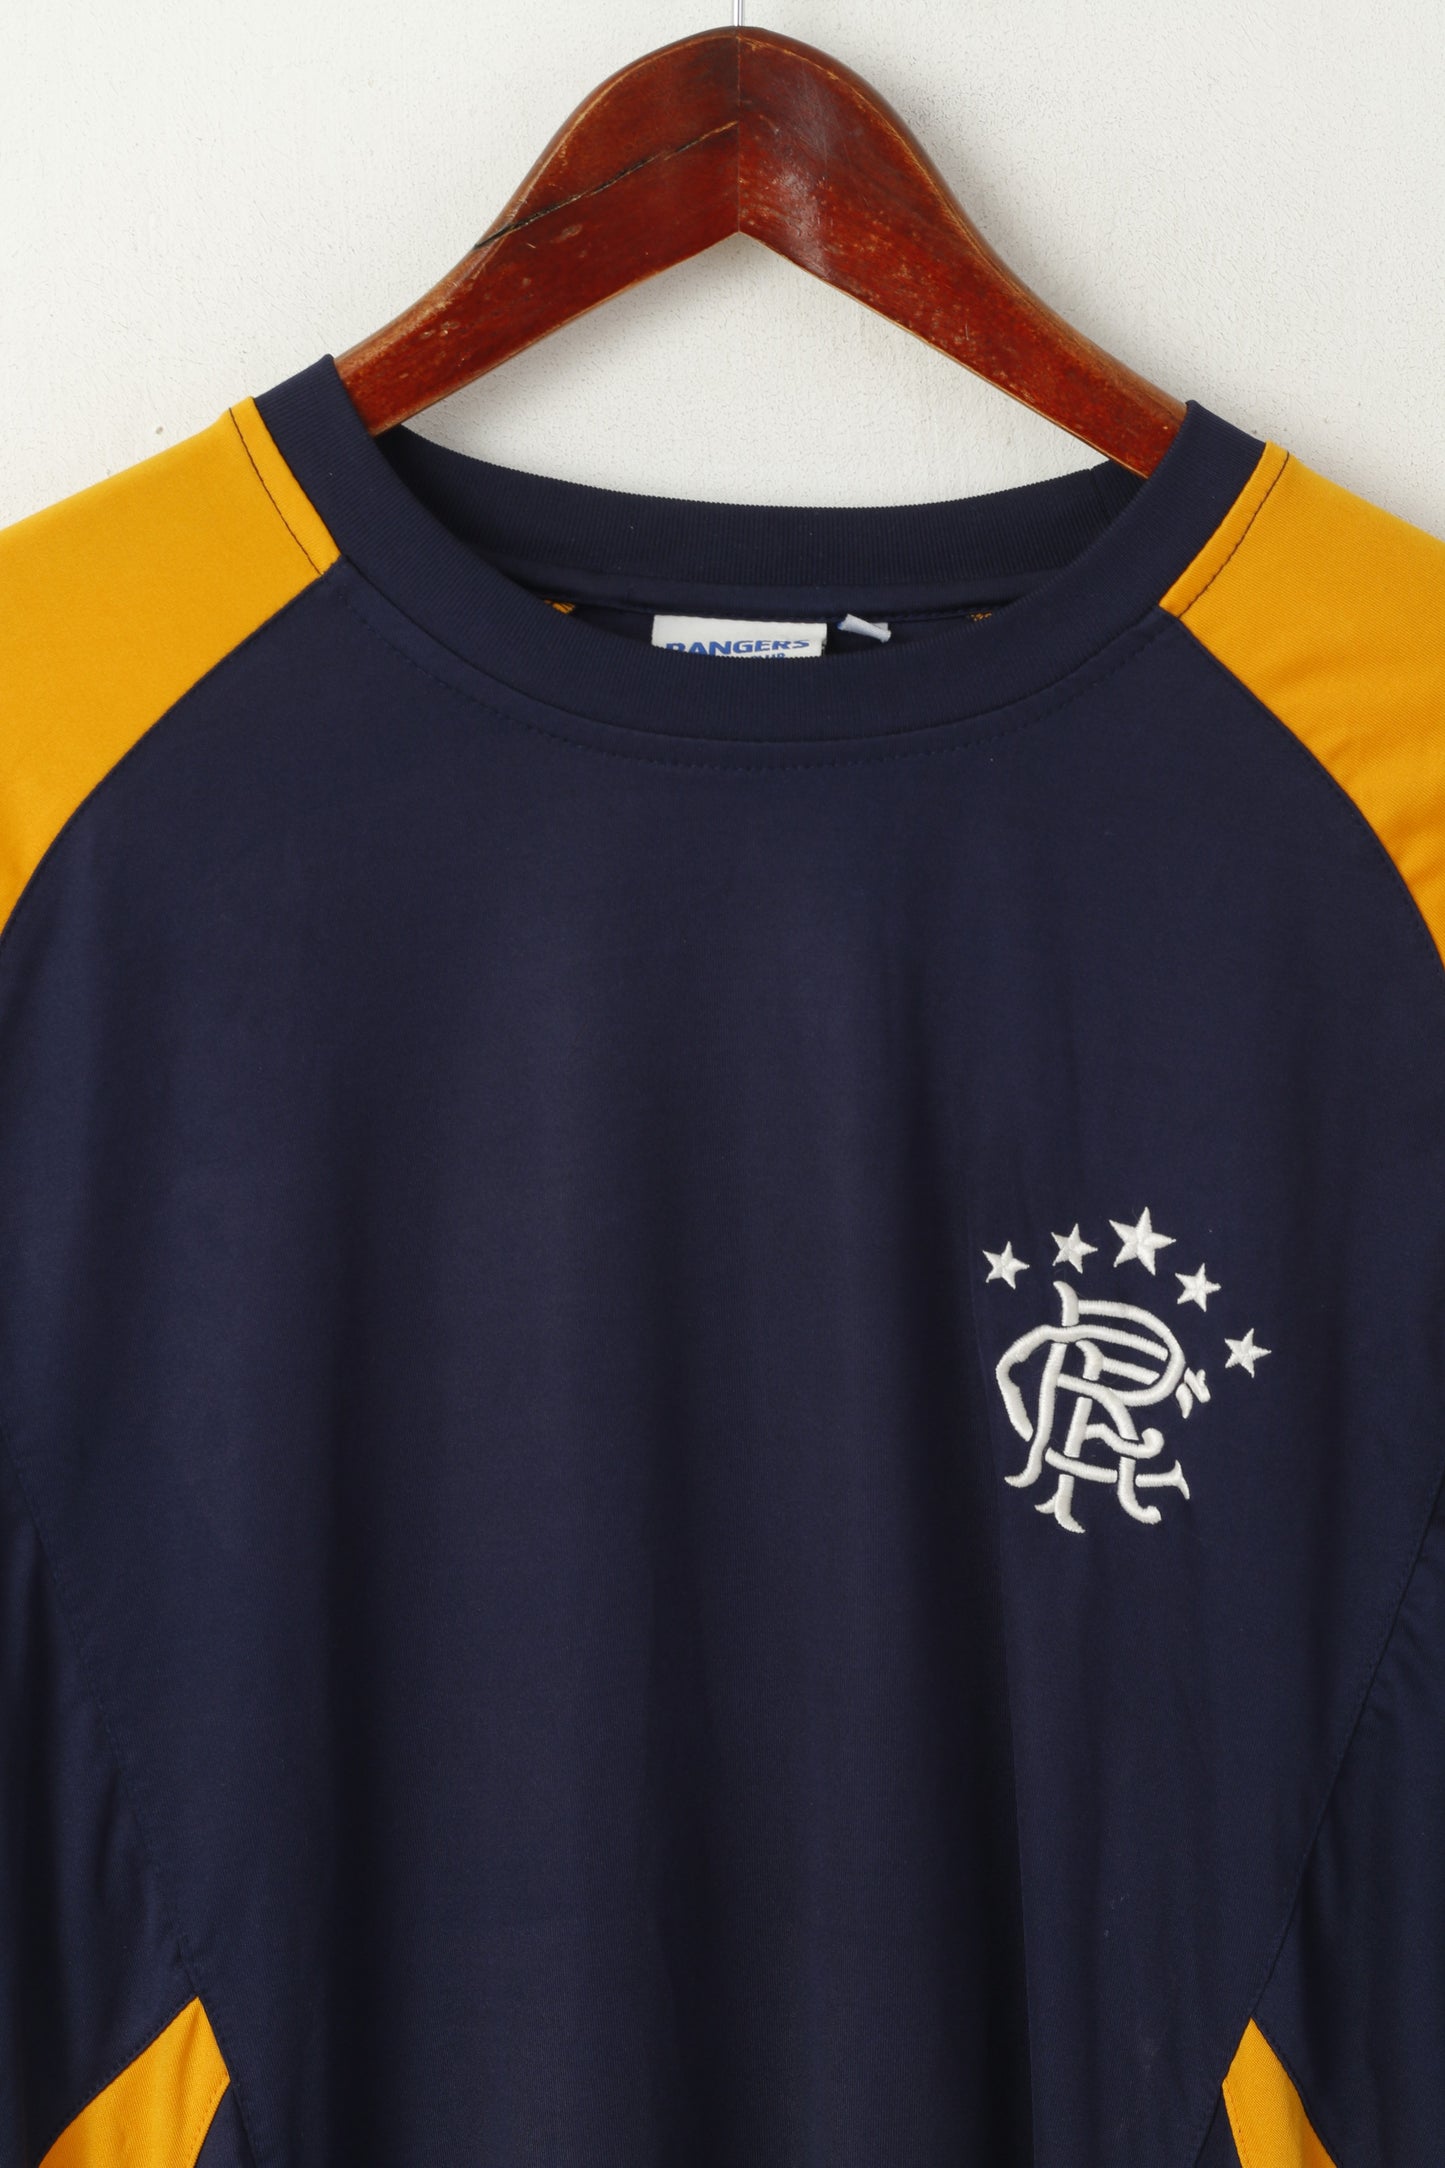 Rangers Official Product Men XL Shirt Navy Football Club Jersey Activewear Top